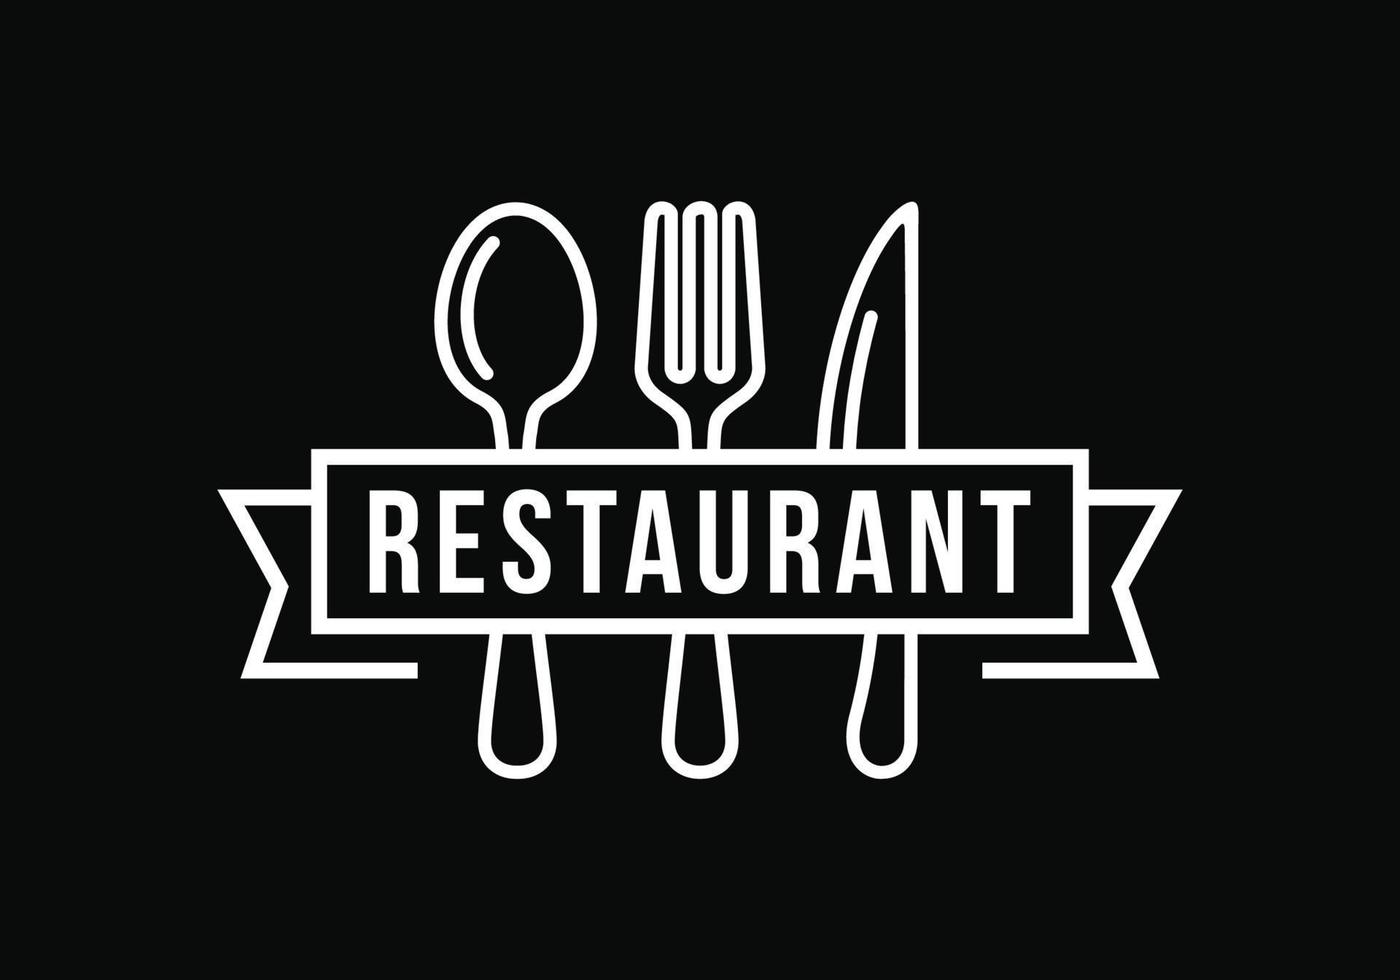 restaurante logotipo modelo Projeto vetor